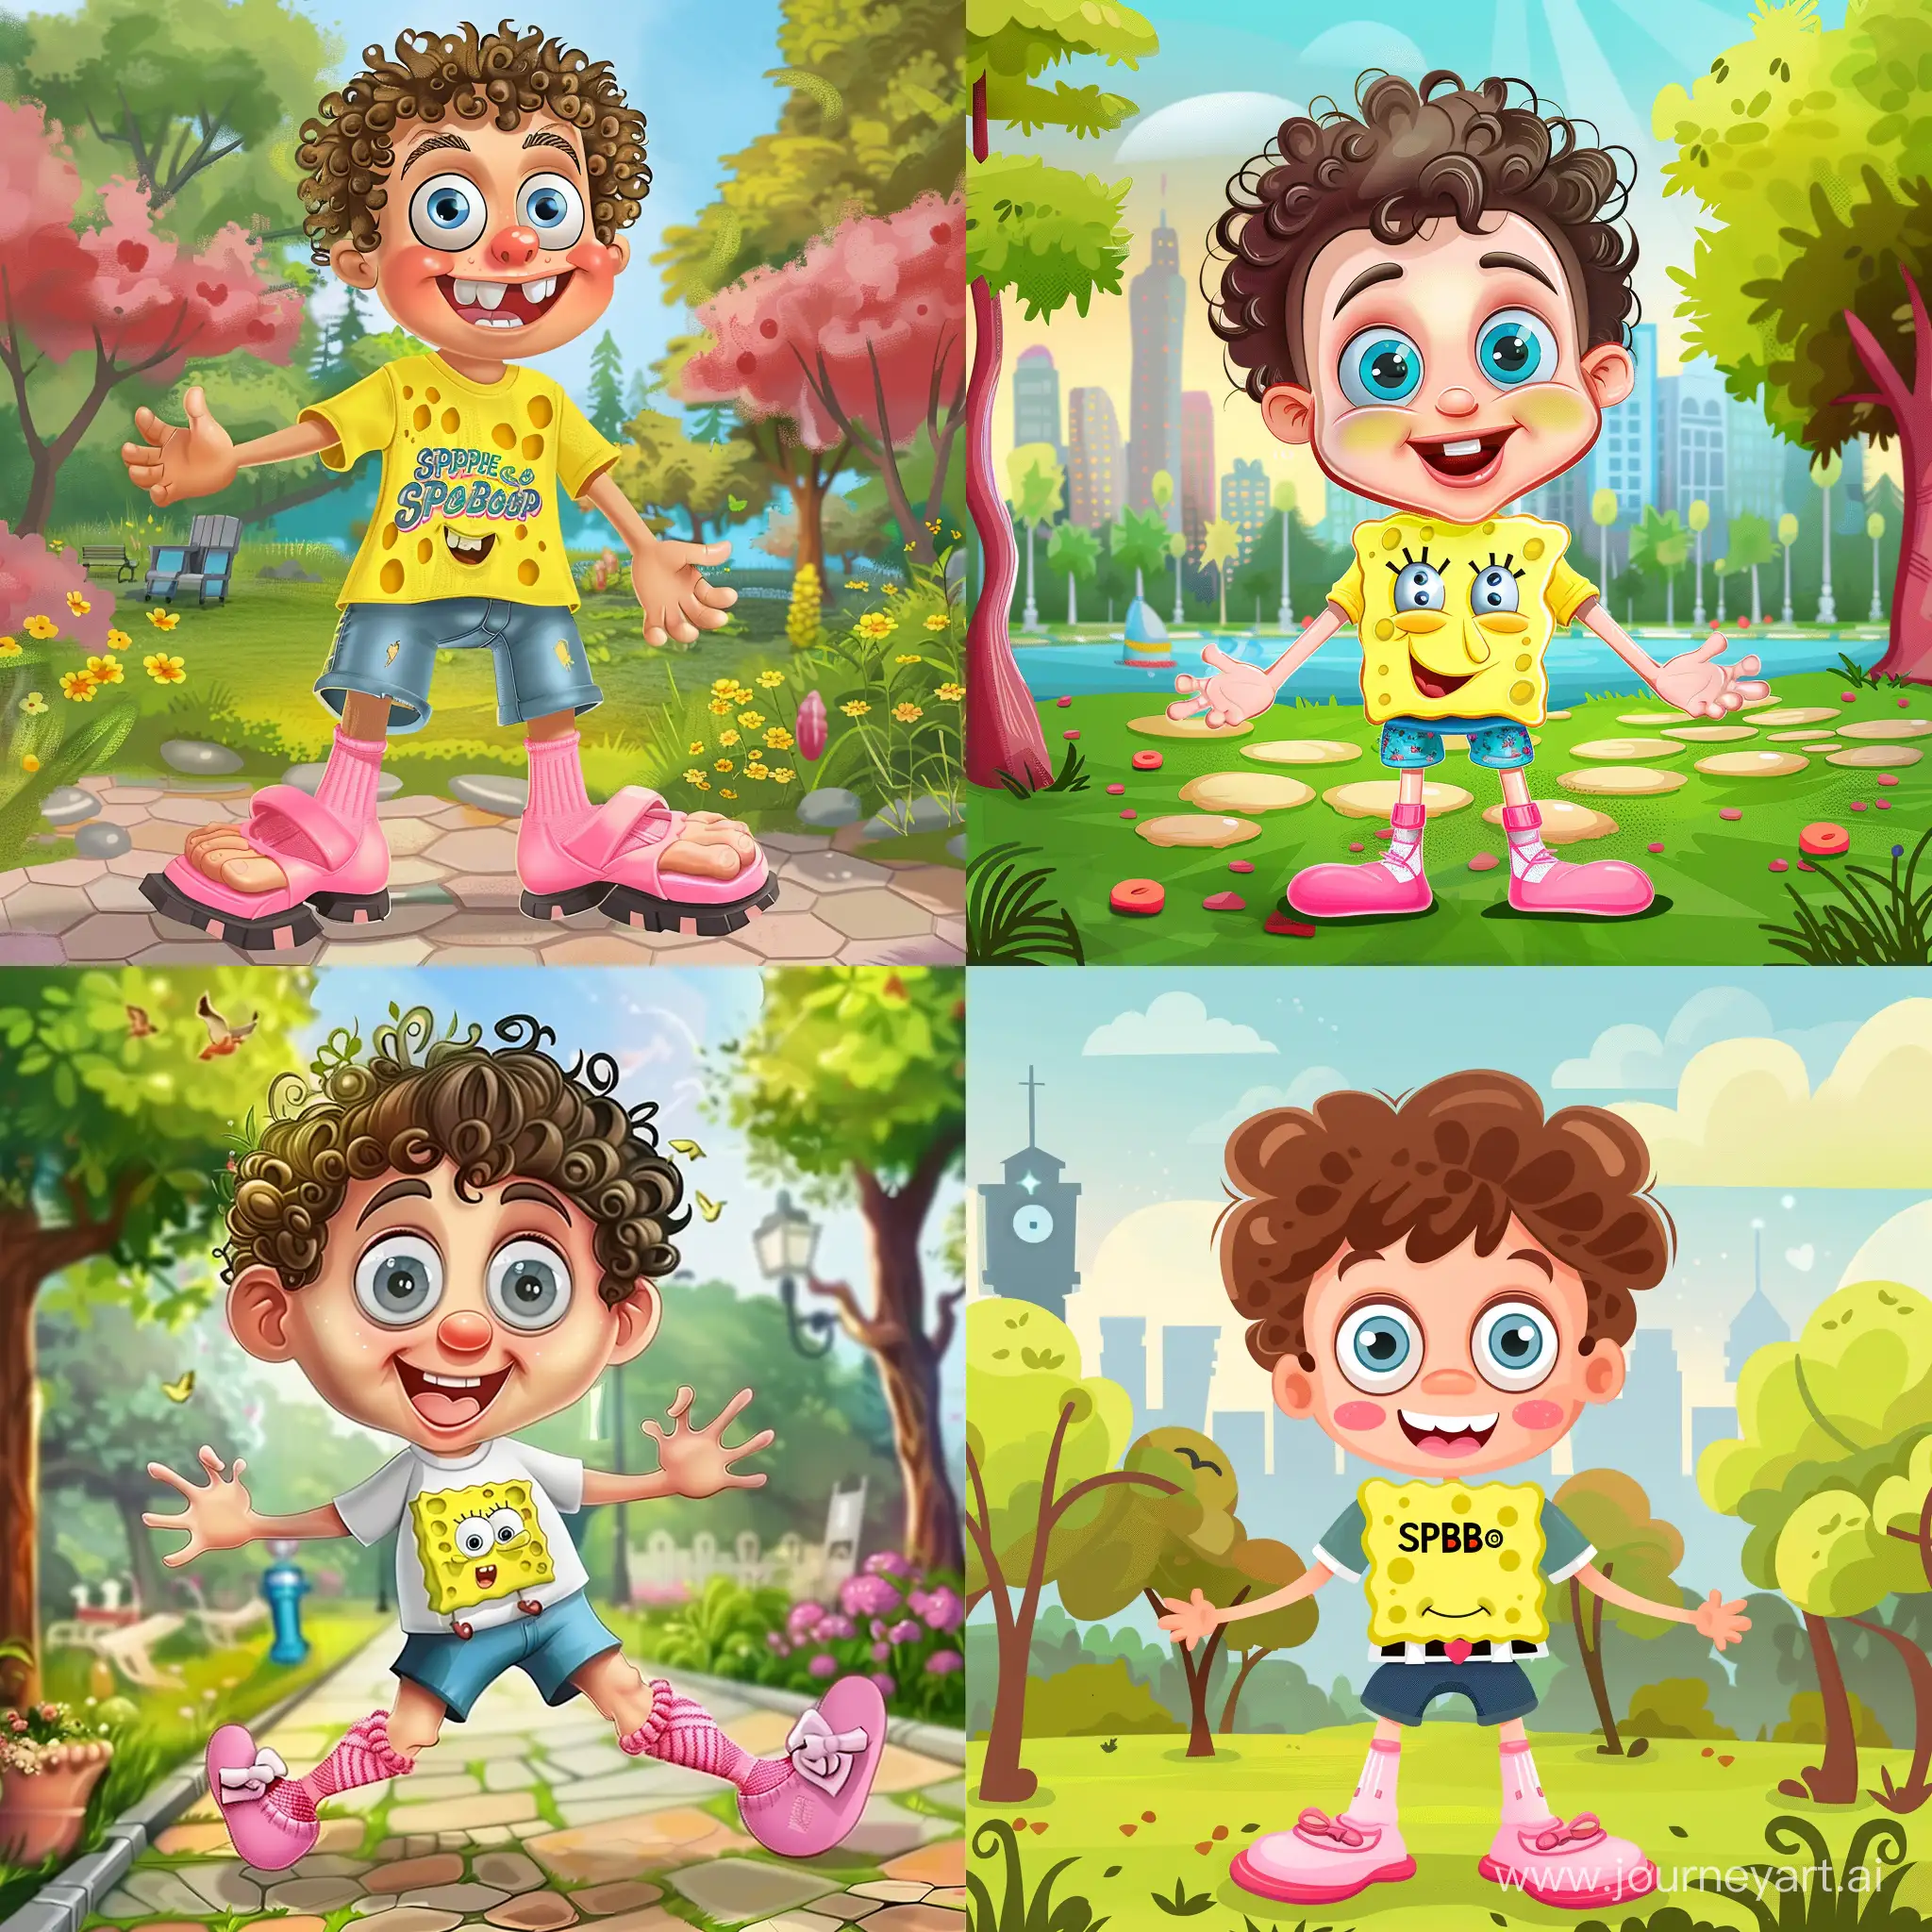 Cheerful-Boy-in-SpongeBob-TShirt-and-Pink-Slippers-Enjoying-Park-Fun